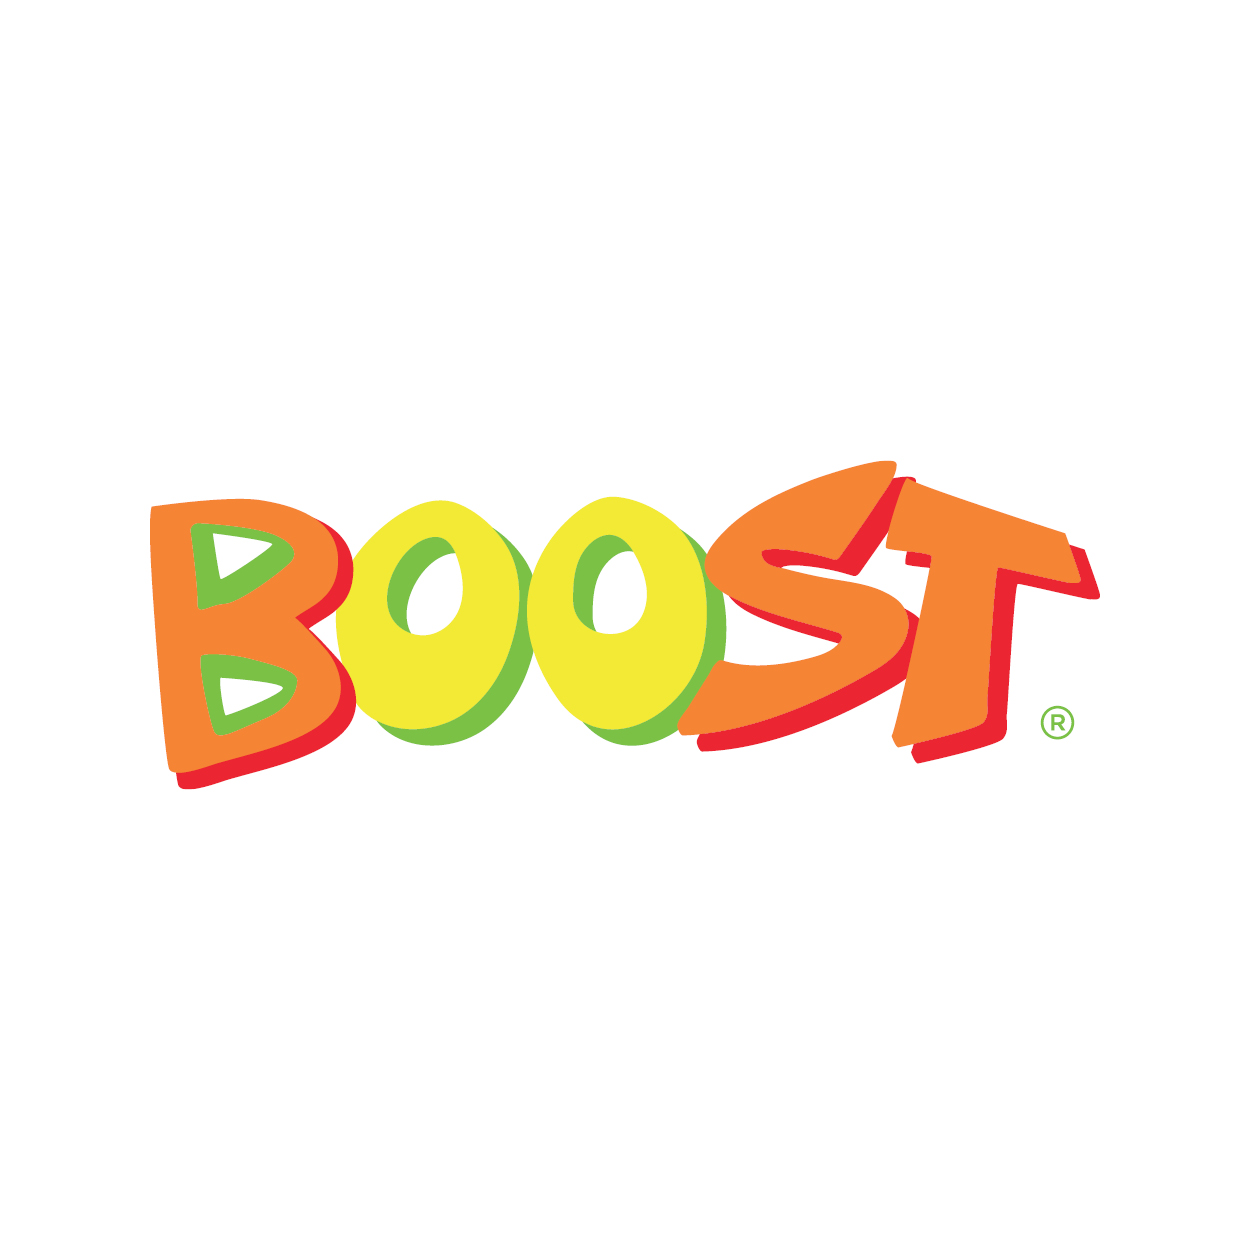 Boost_juice_logo_FY22_360x360.jpg